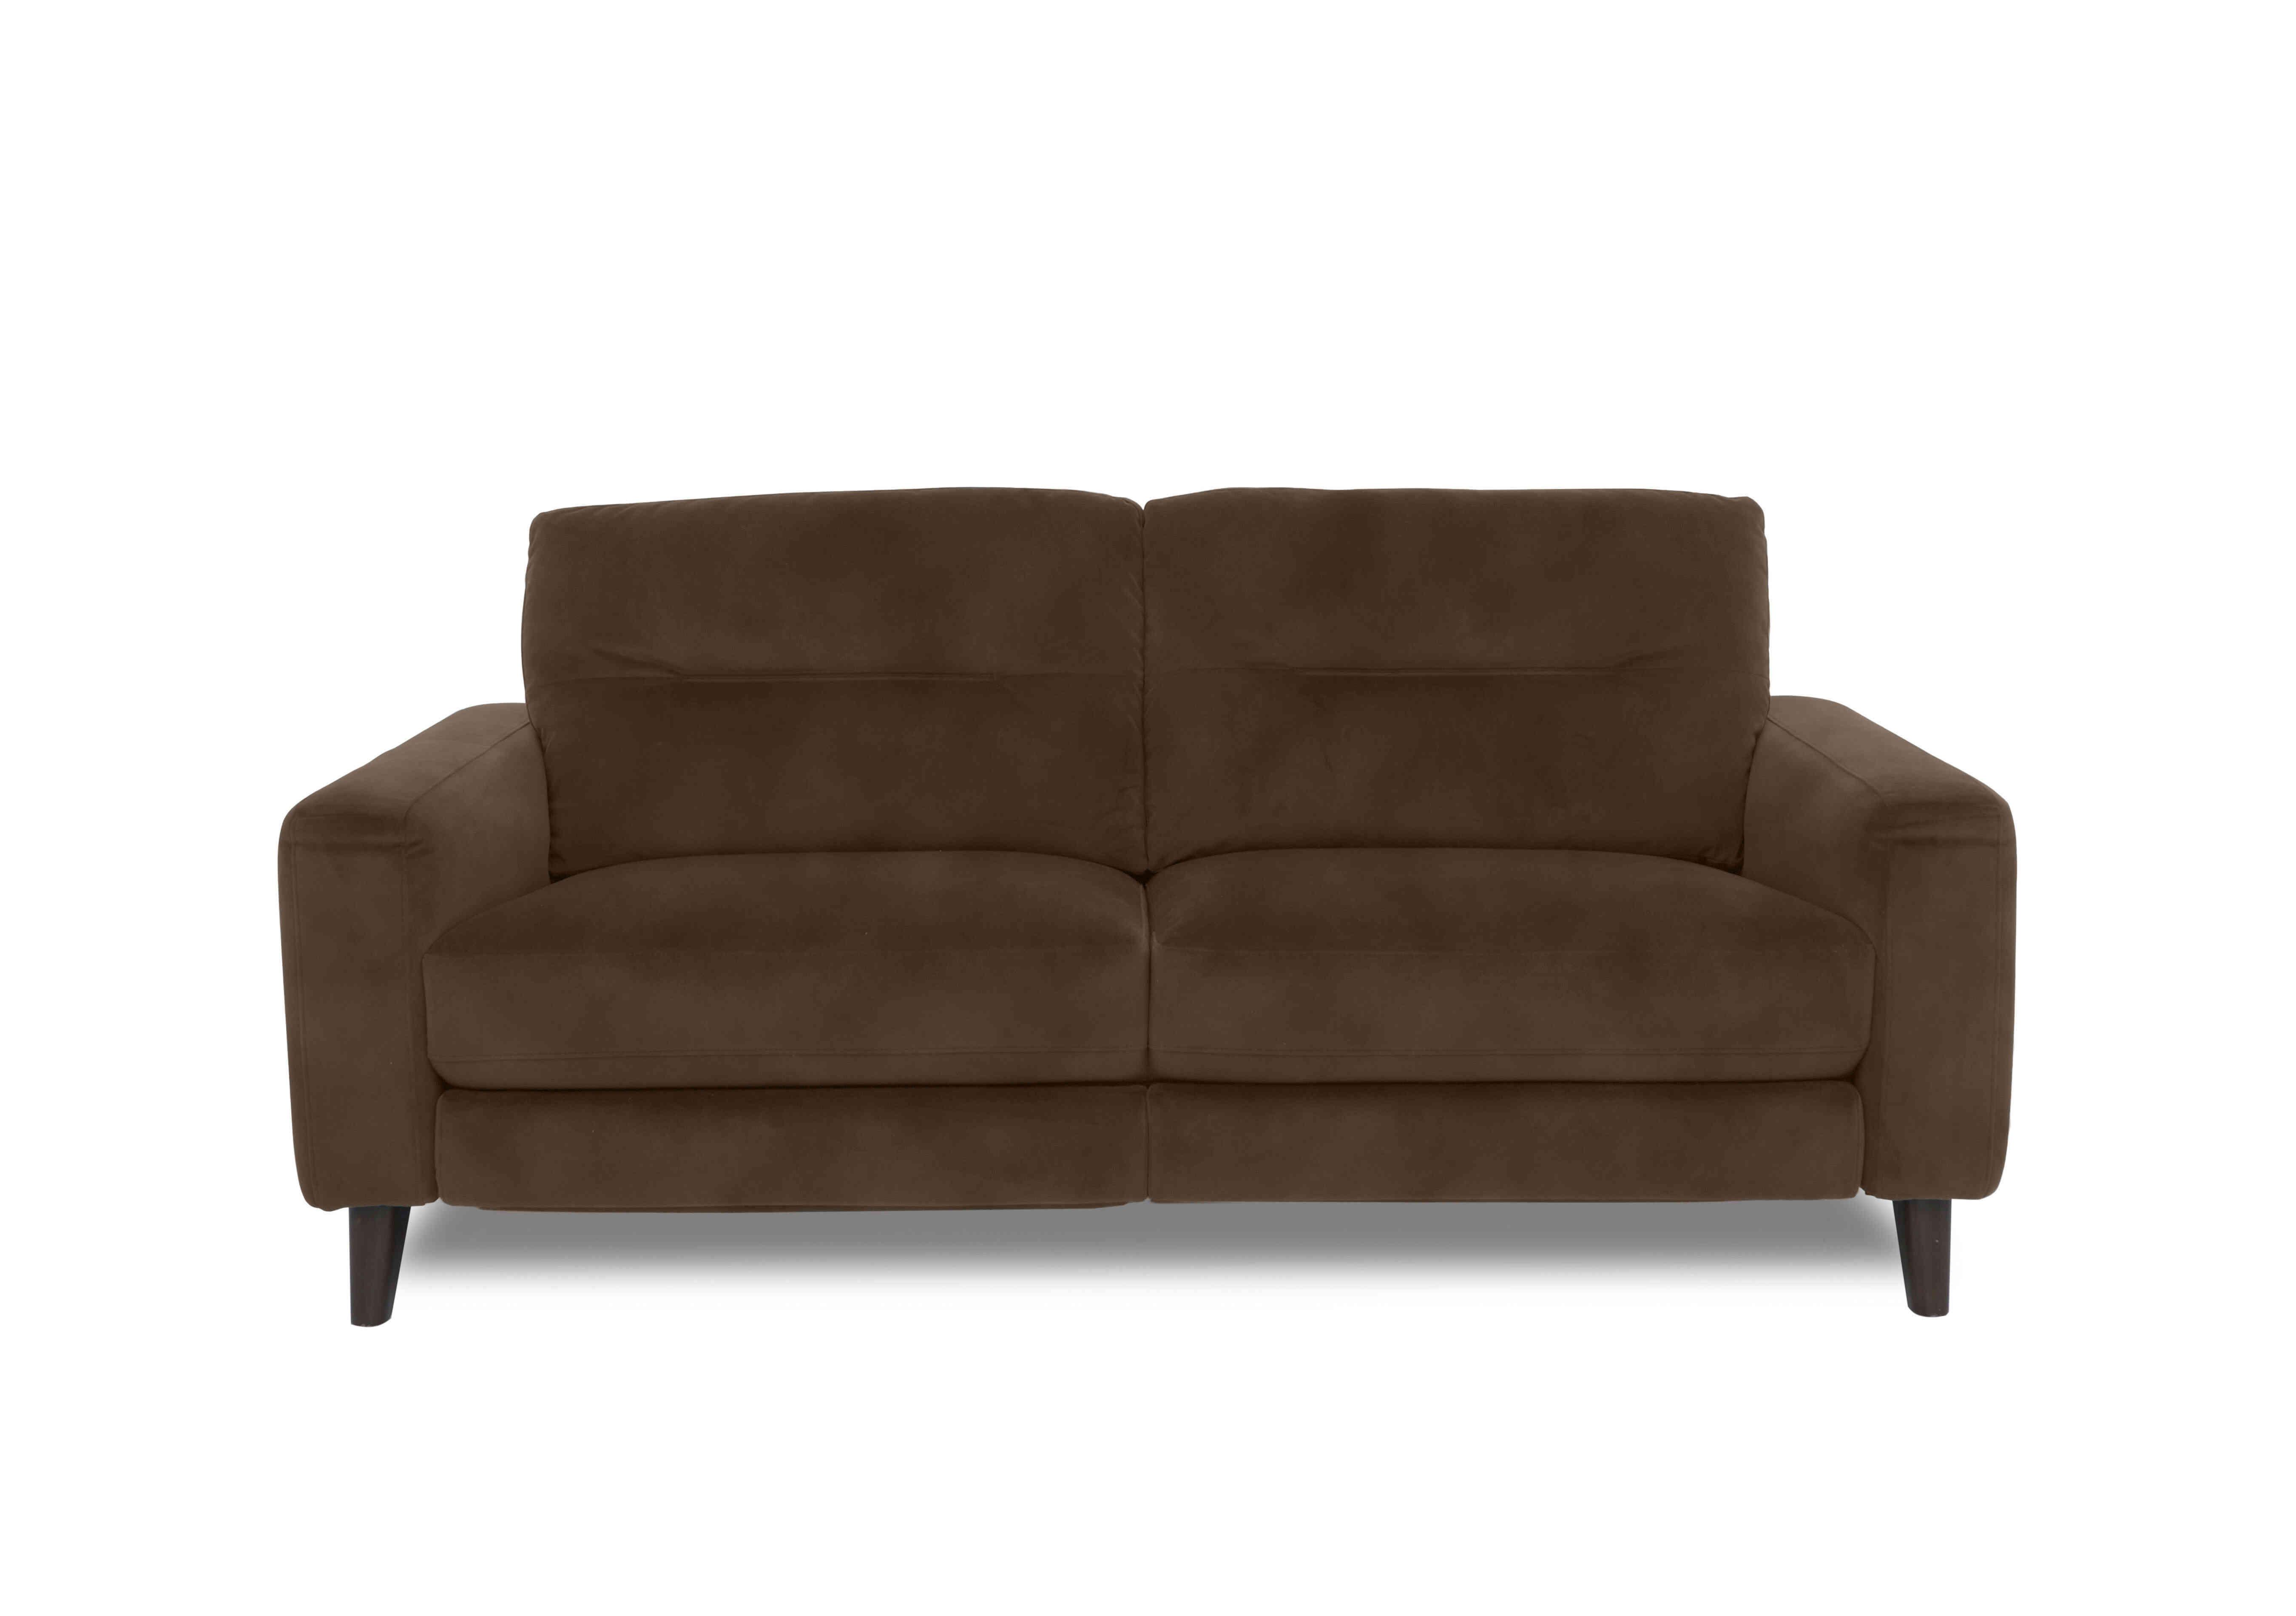 Jules 3 Seater Fabric Sofa in Sfa-Pey-R04 Dark Chocolate on Furniture Village